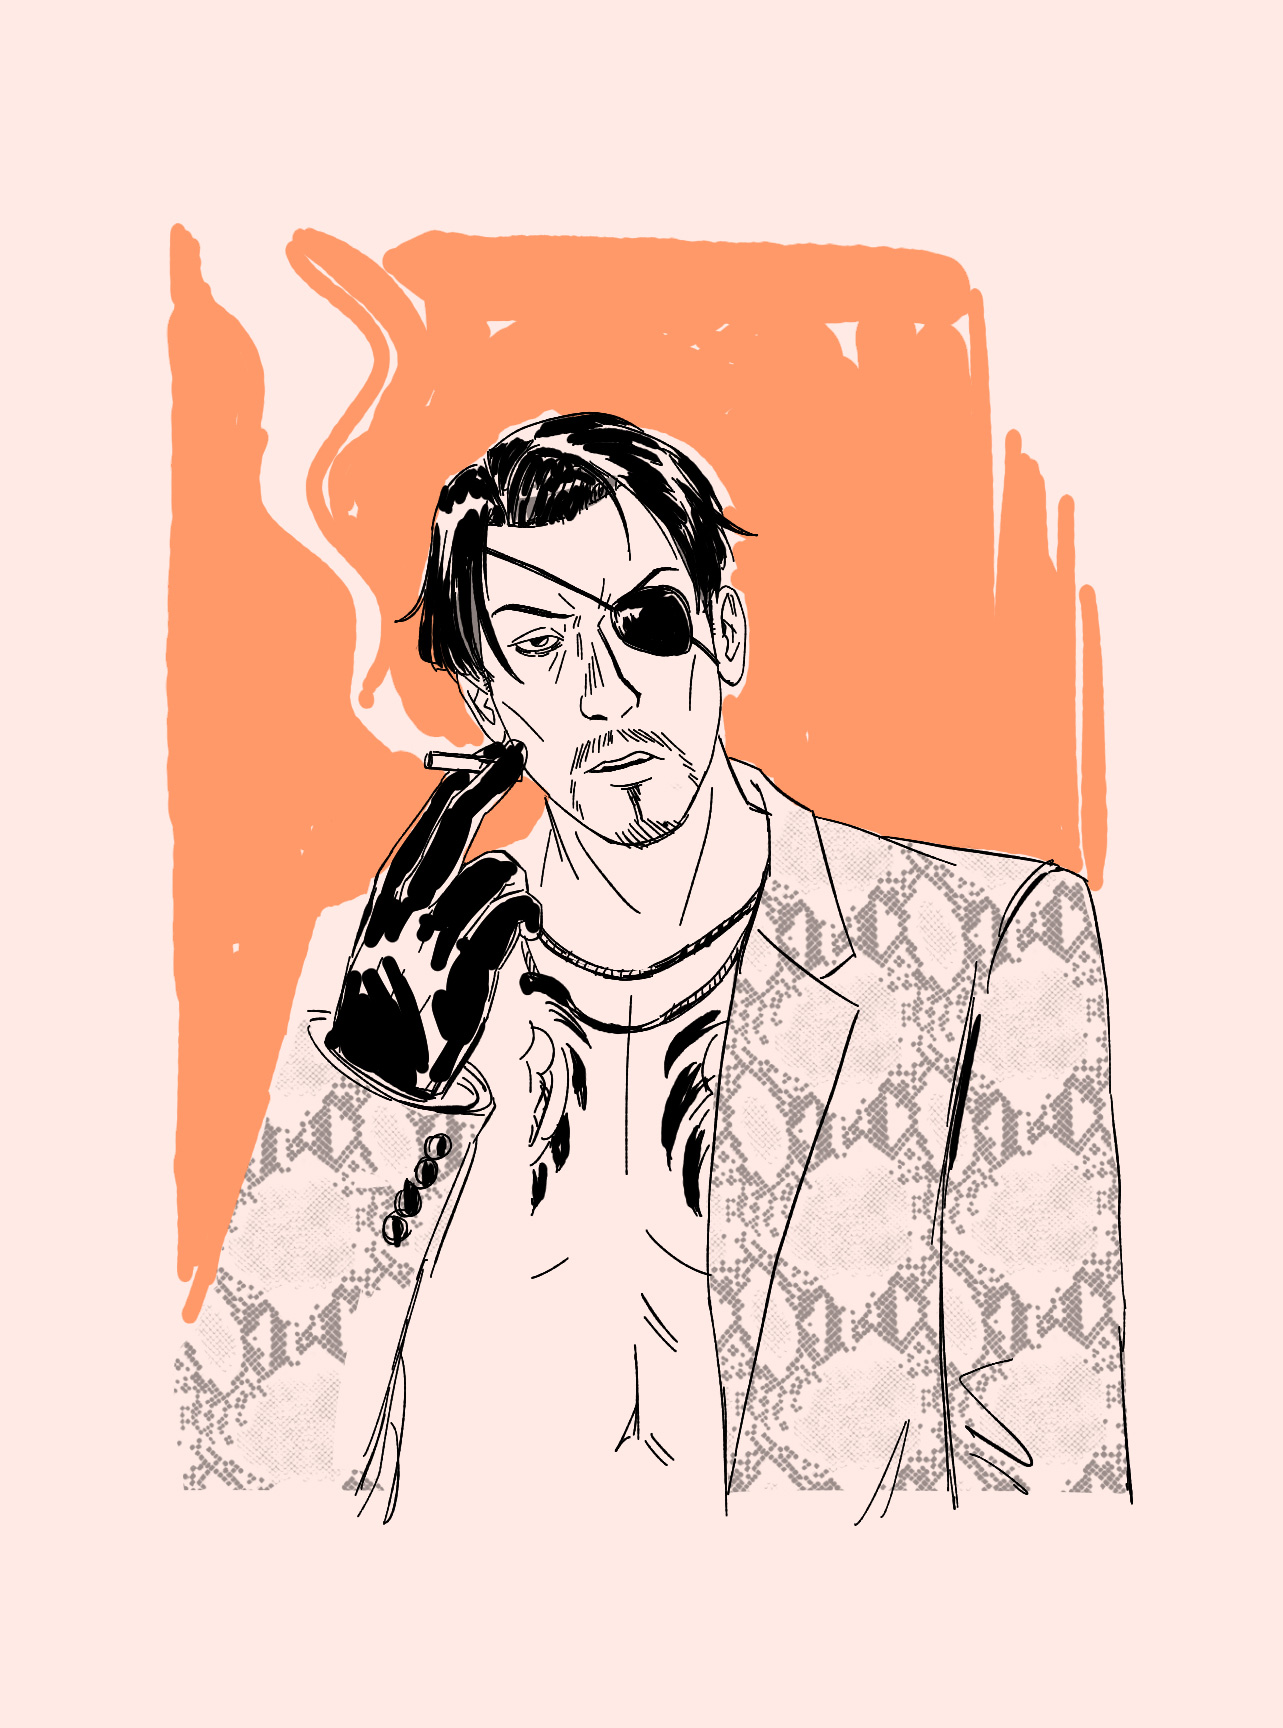 A sketch of Majima smoking.